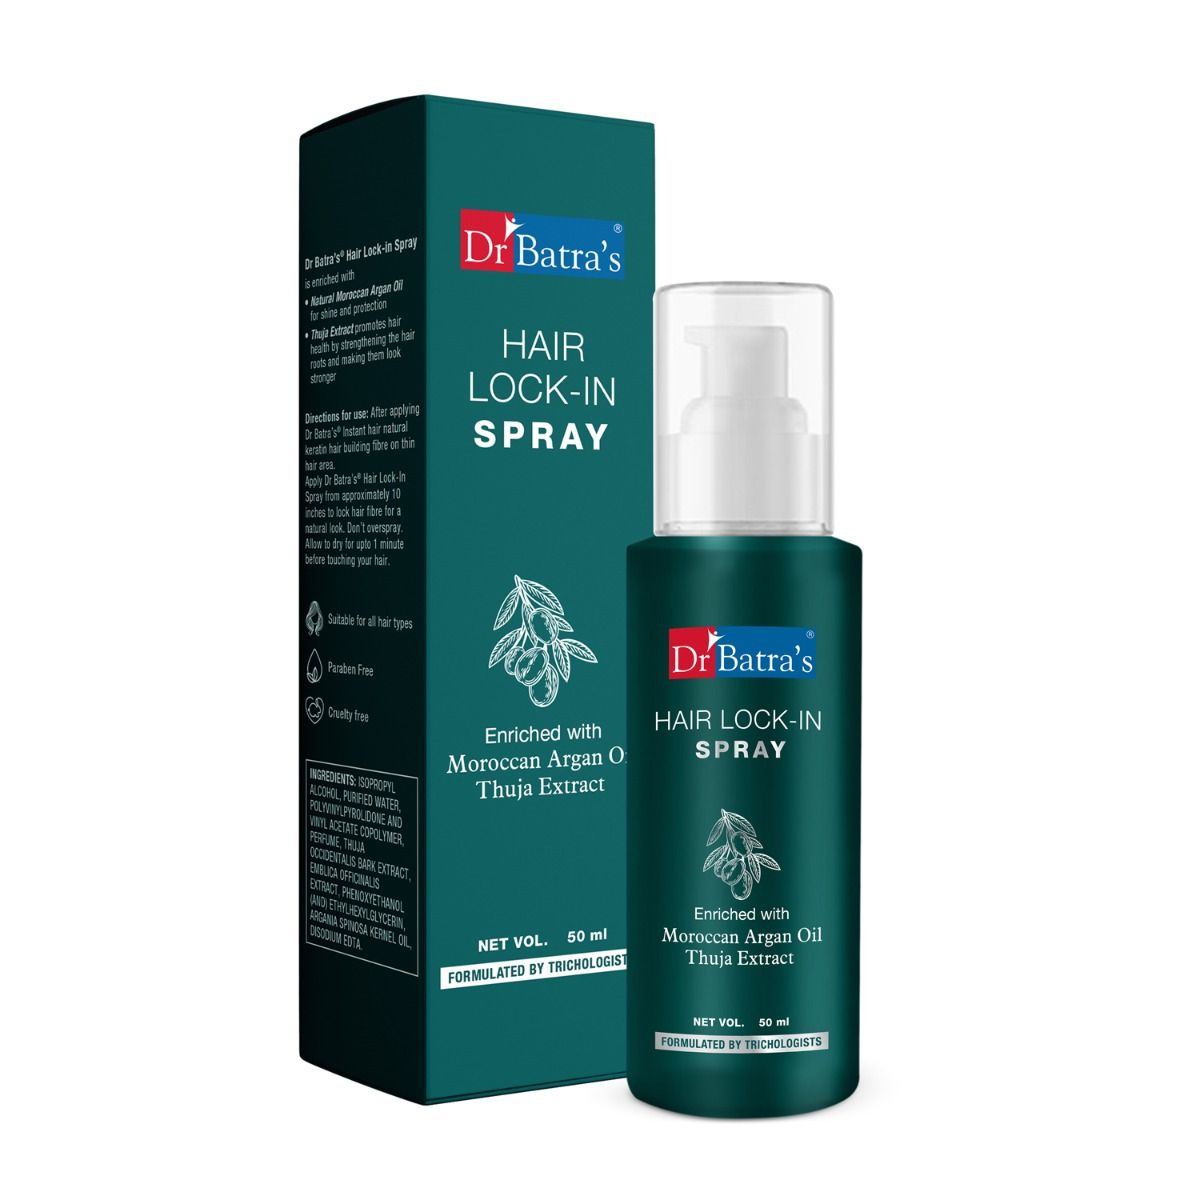     			Dr Batra's PRO+ Hair Lock-In Spray + Hair Lock-In Spray 50 ml